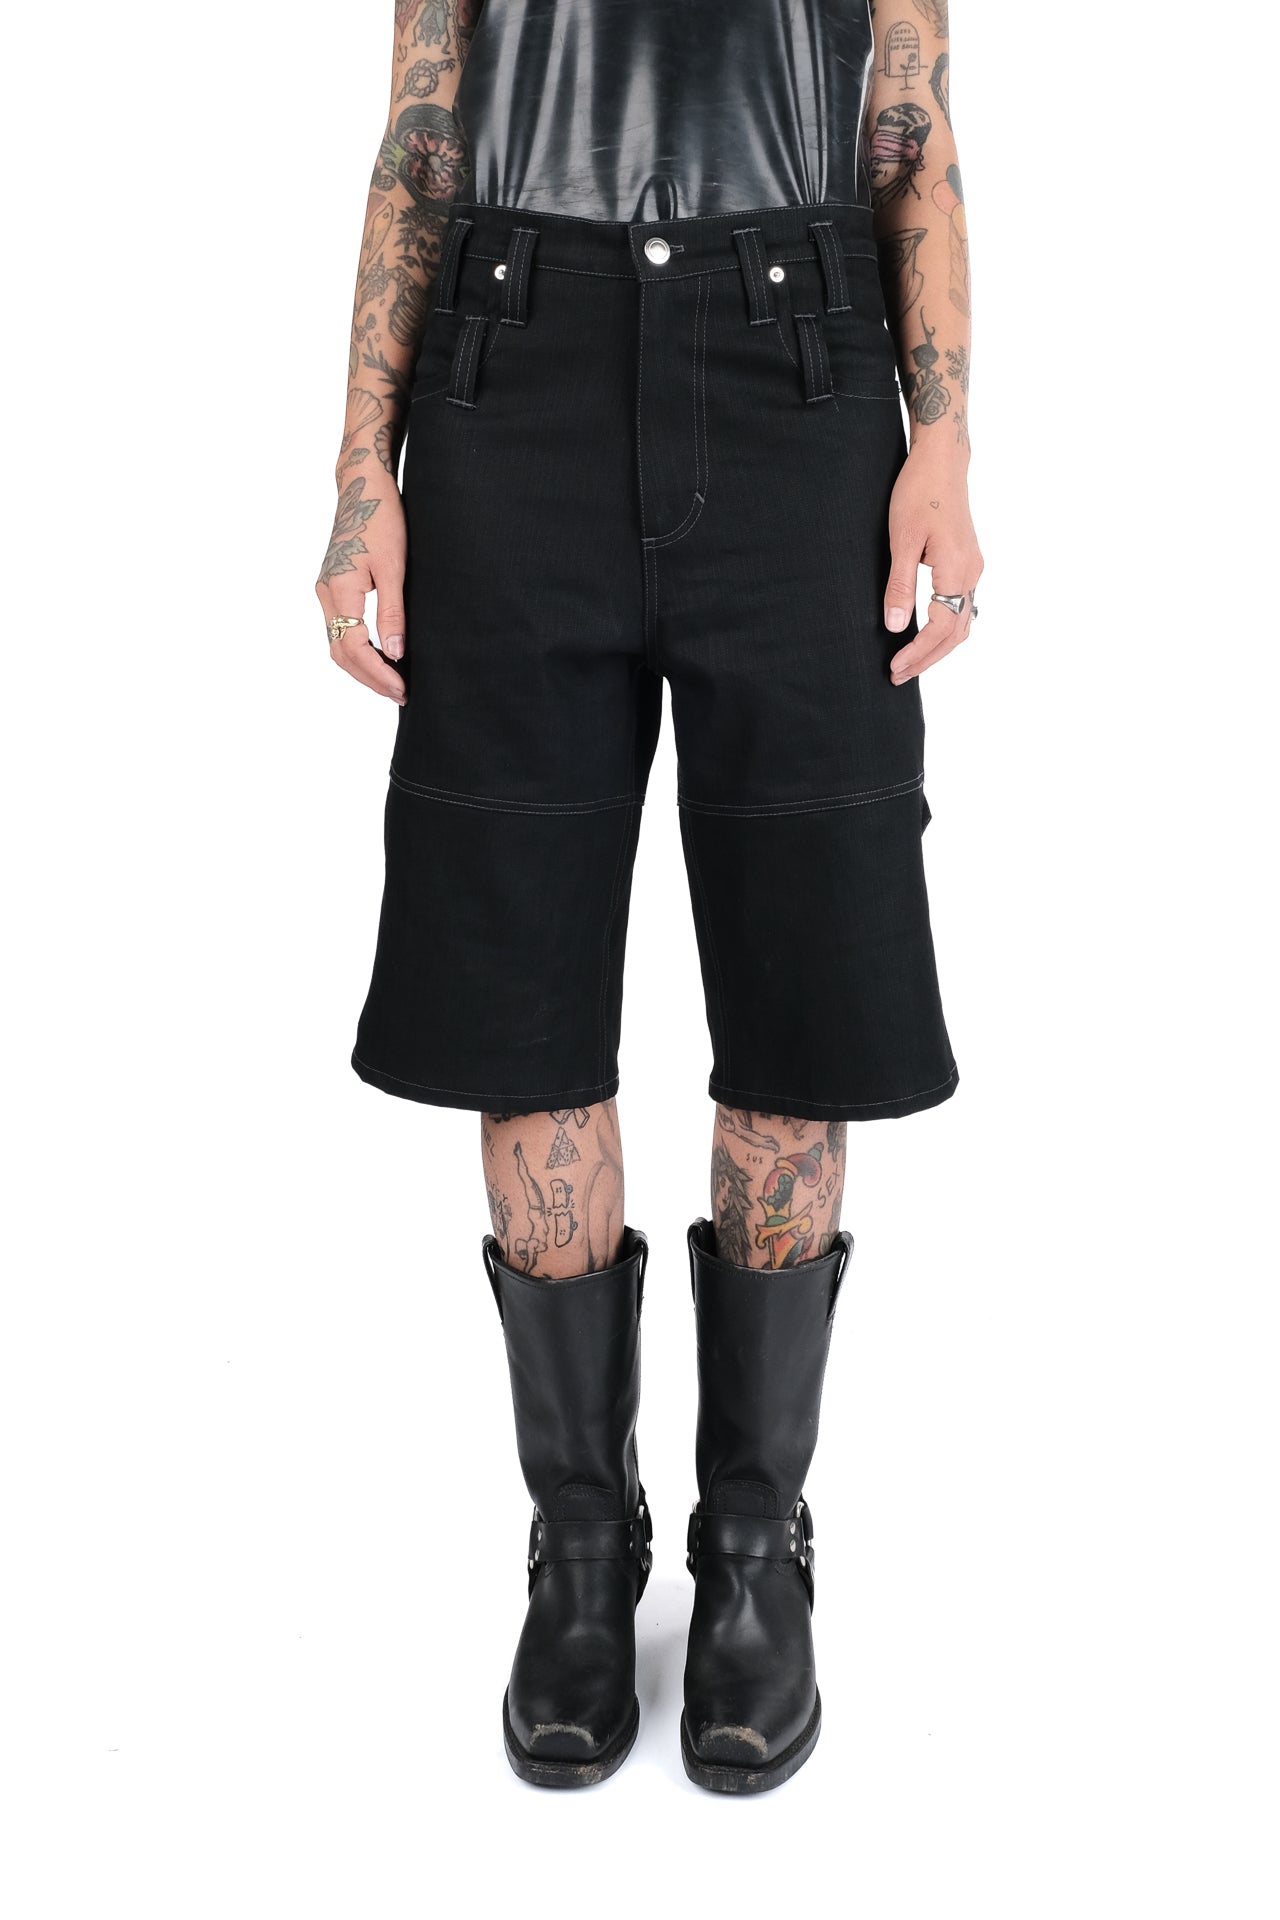 Black Denim Bondage Shorts